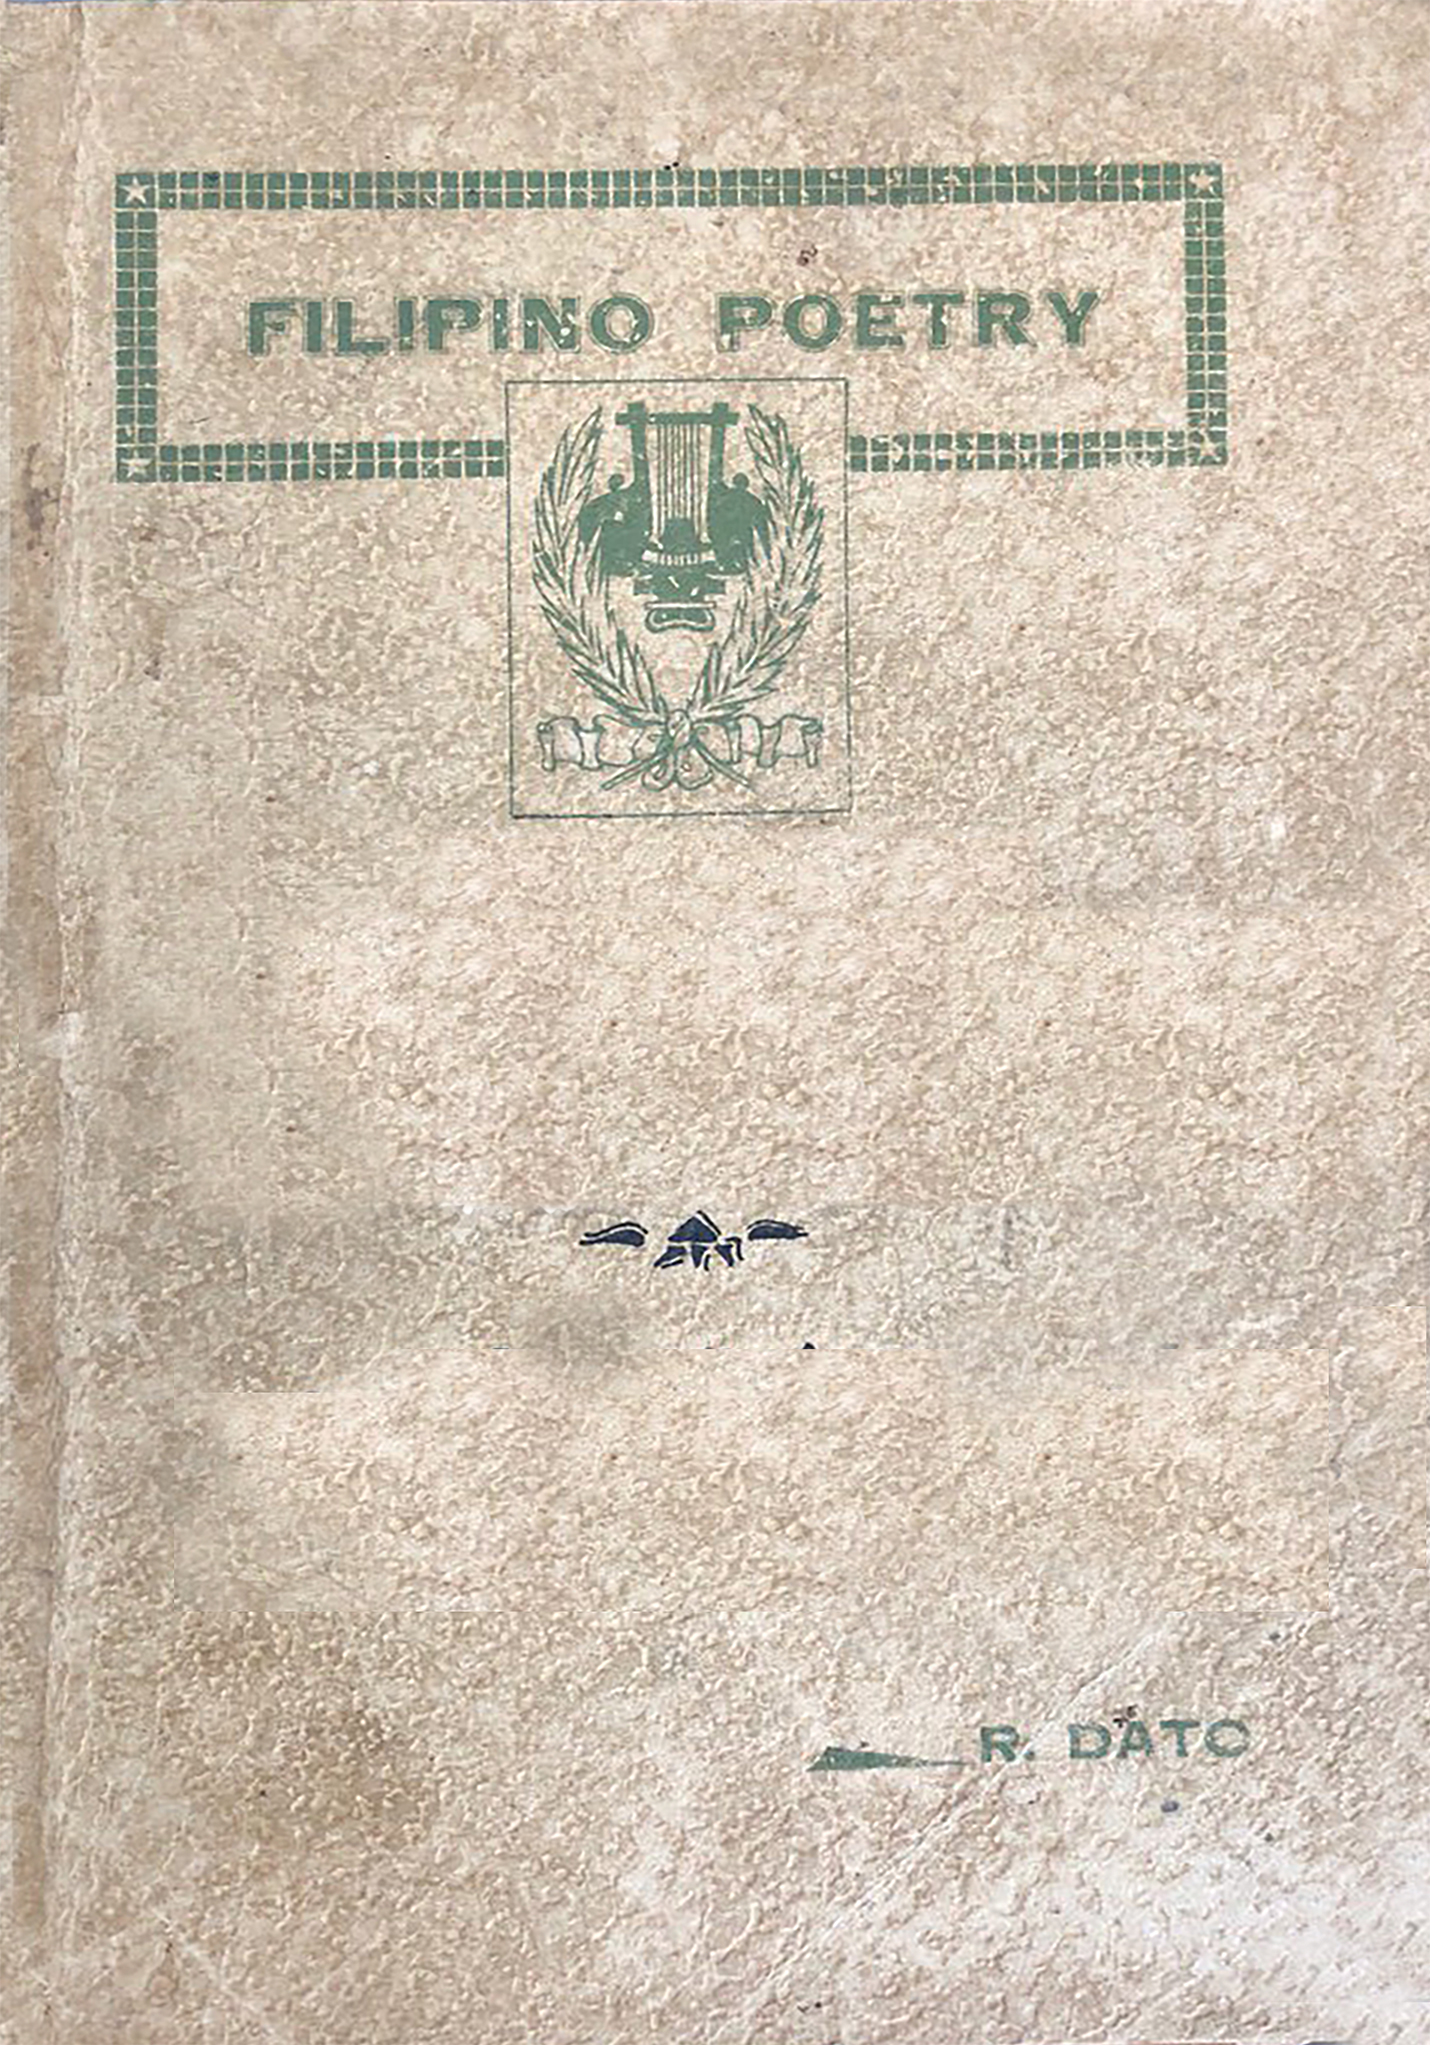 Filipino Poetry by Rodolfo Dato